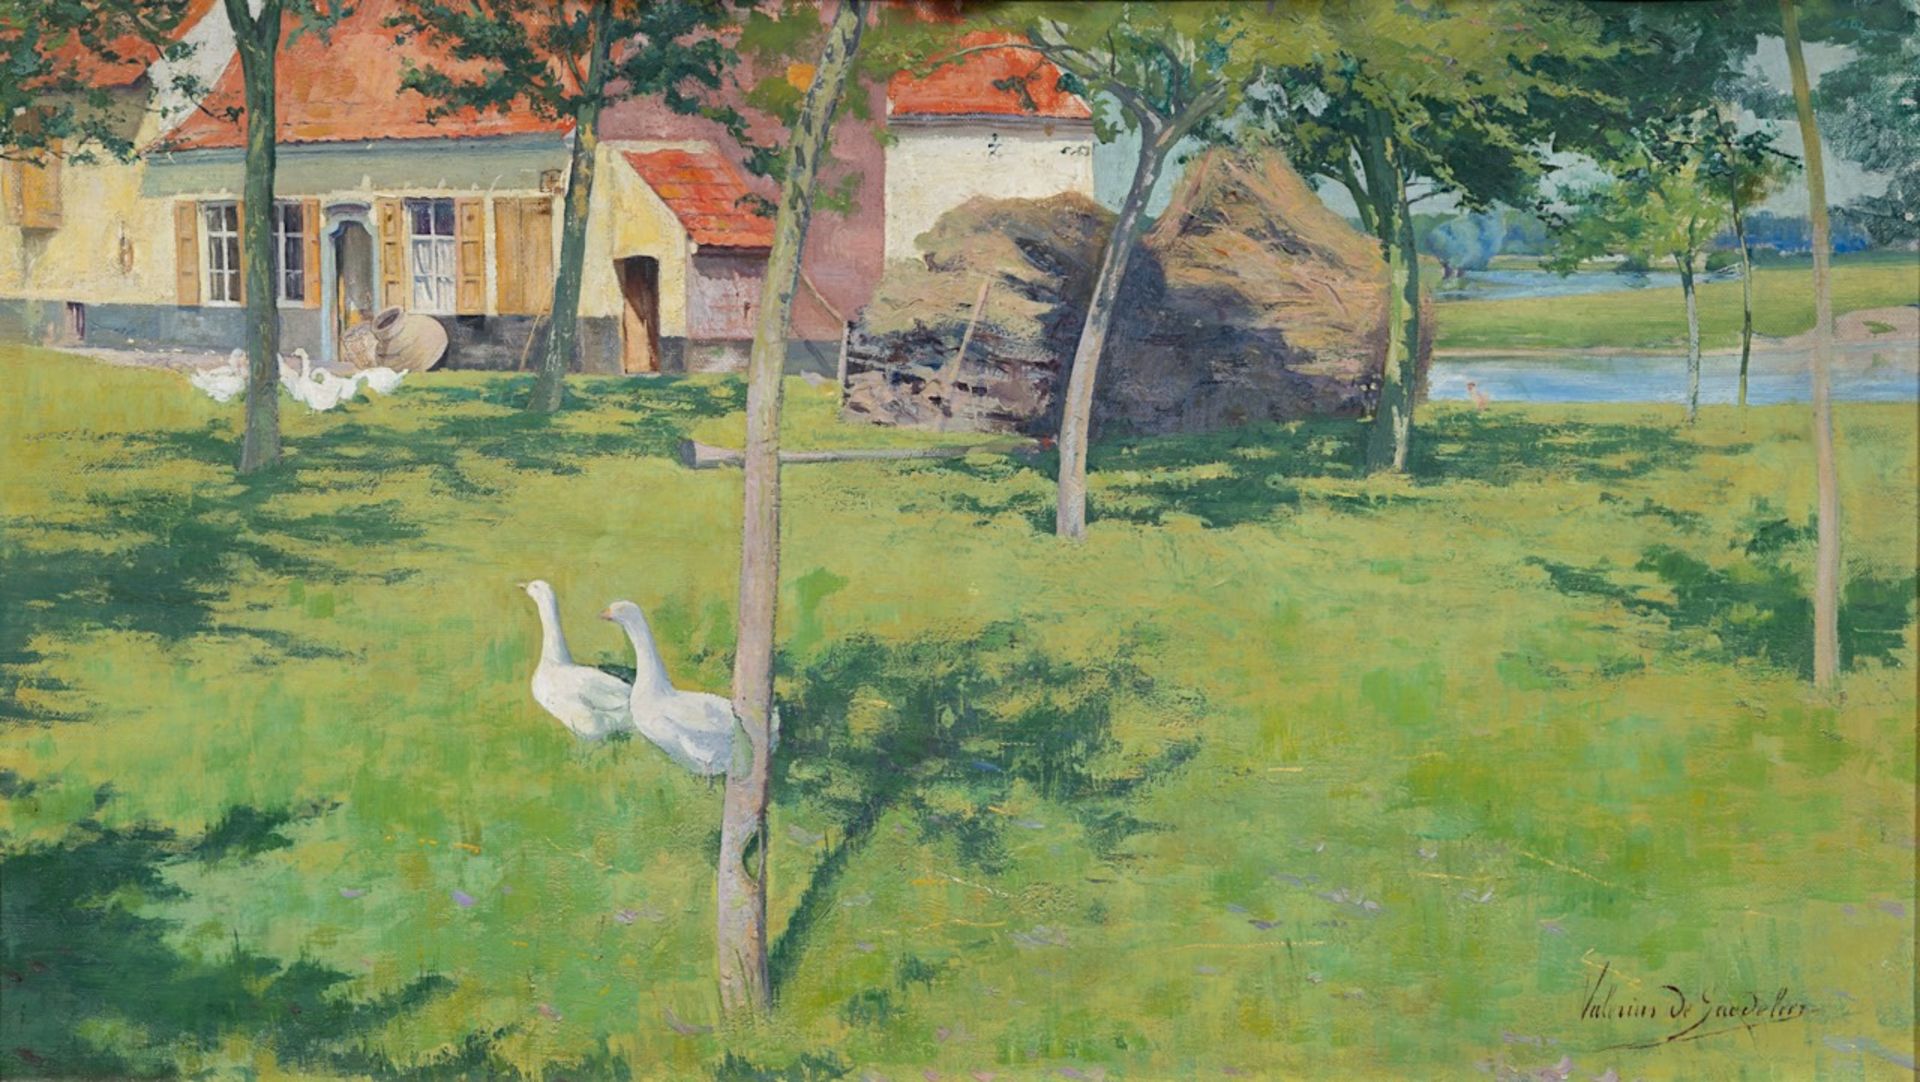 Valerius De Saedeleer (1867-1942), the 'Tempelhof' farm at Sint-Martens-Latem, ca. 1902/3, oil on ca